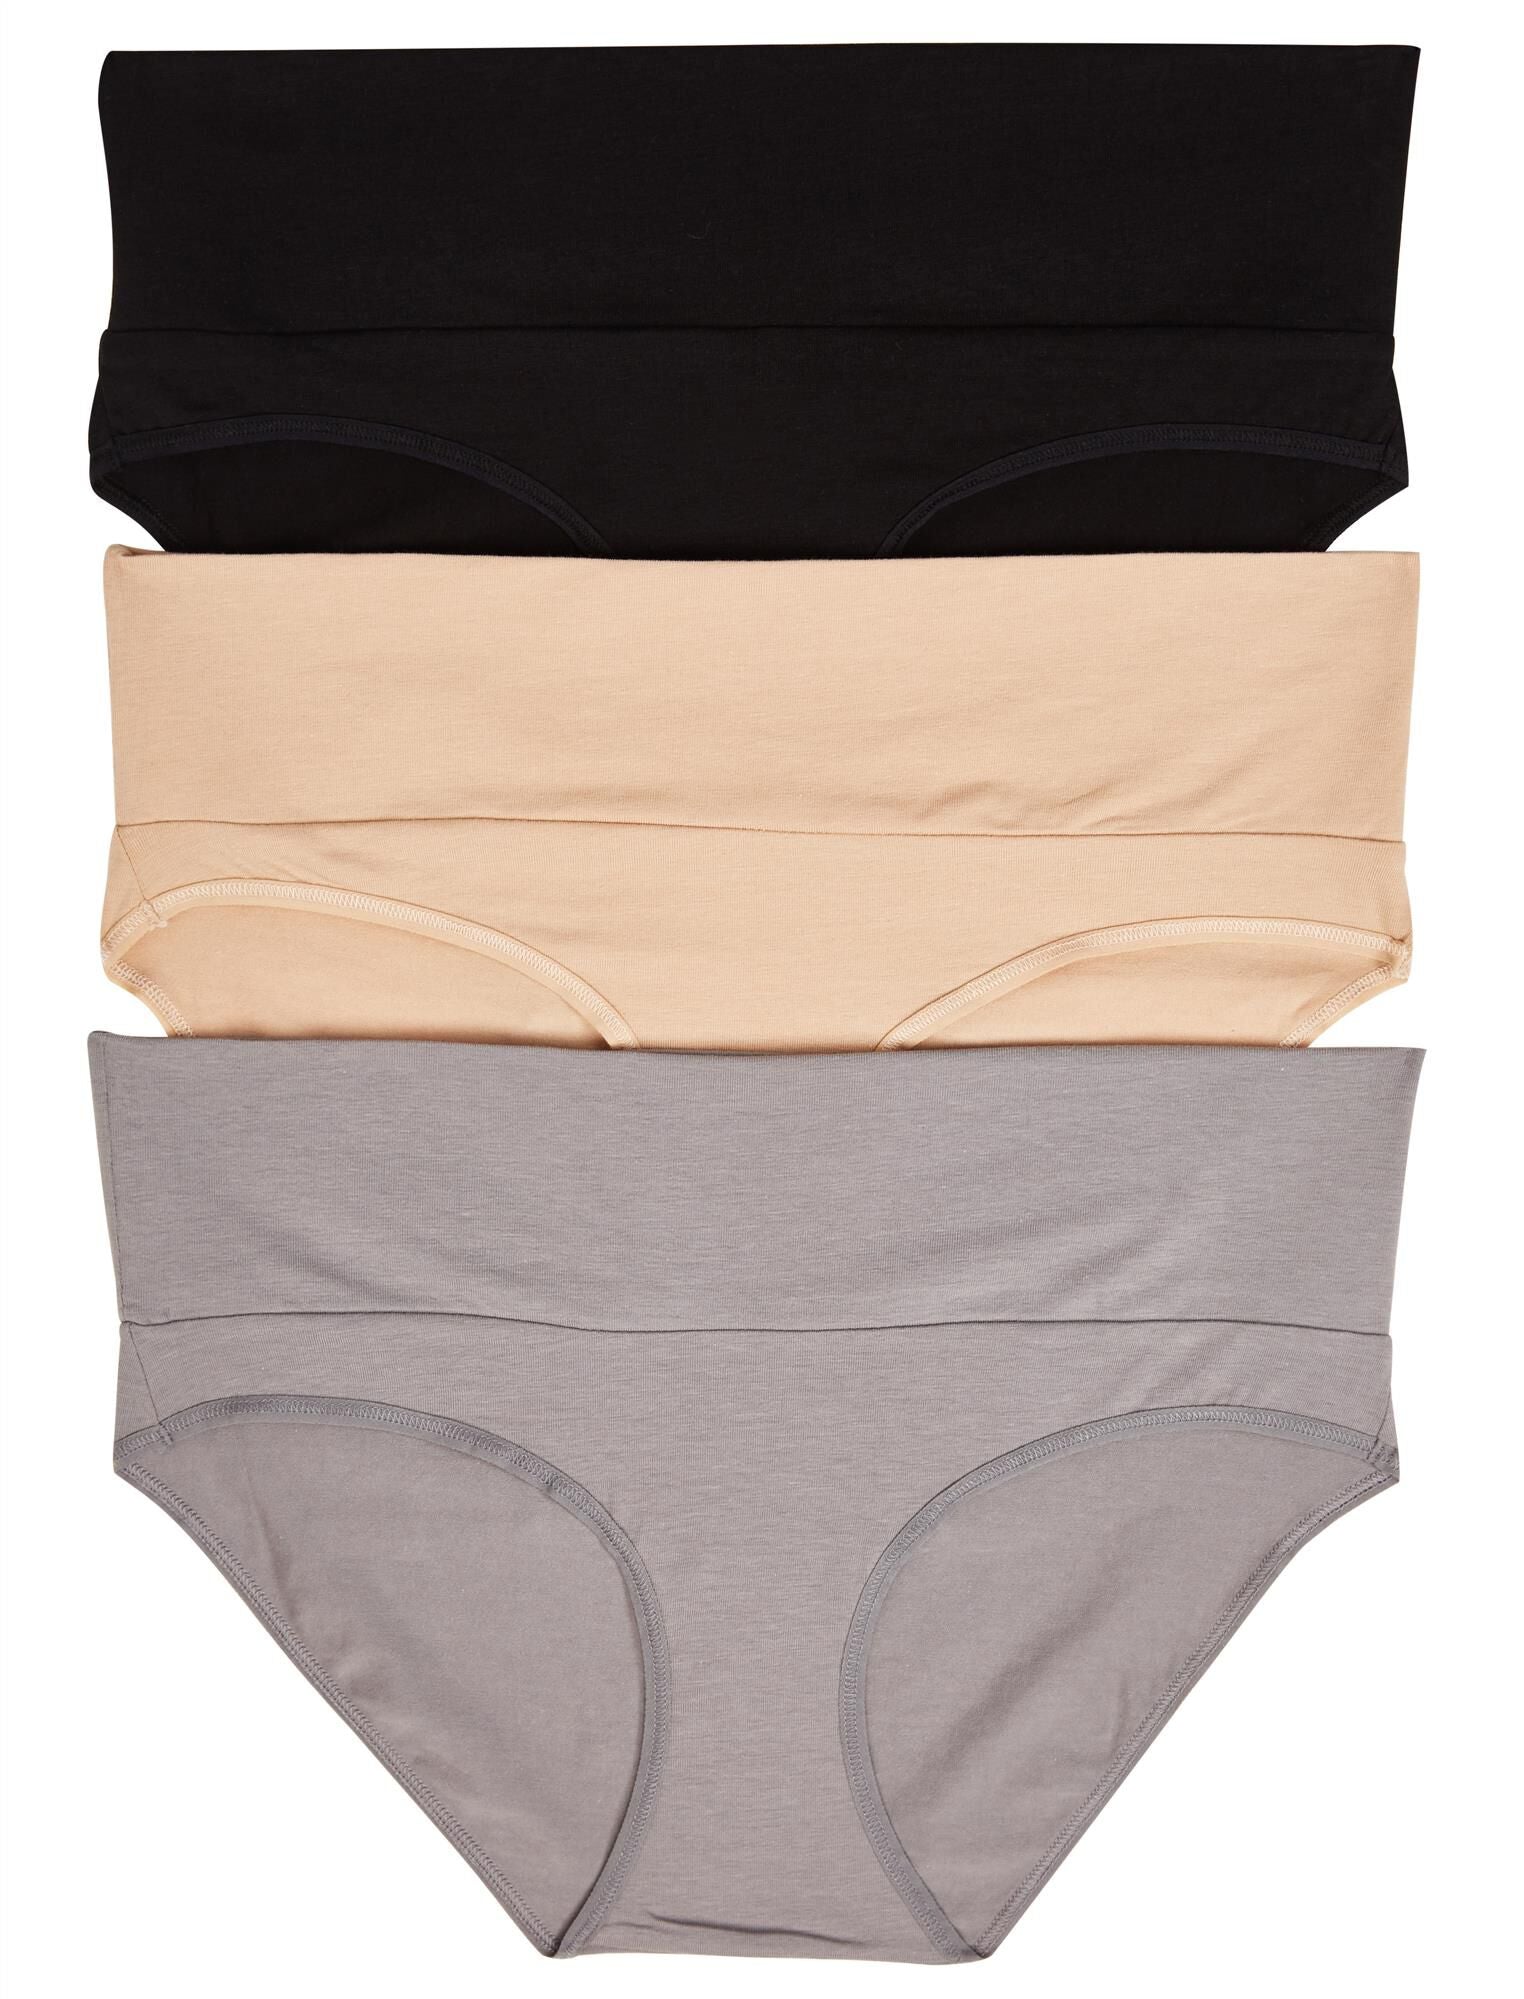 Qchomee Maternity Belt Pregnancy Support Belly Waist Belt